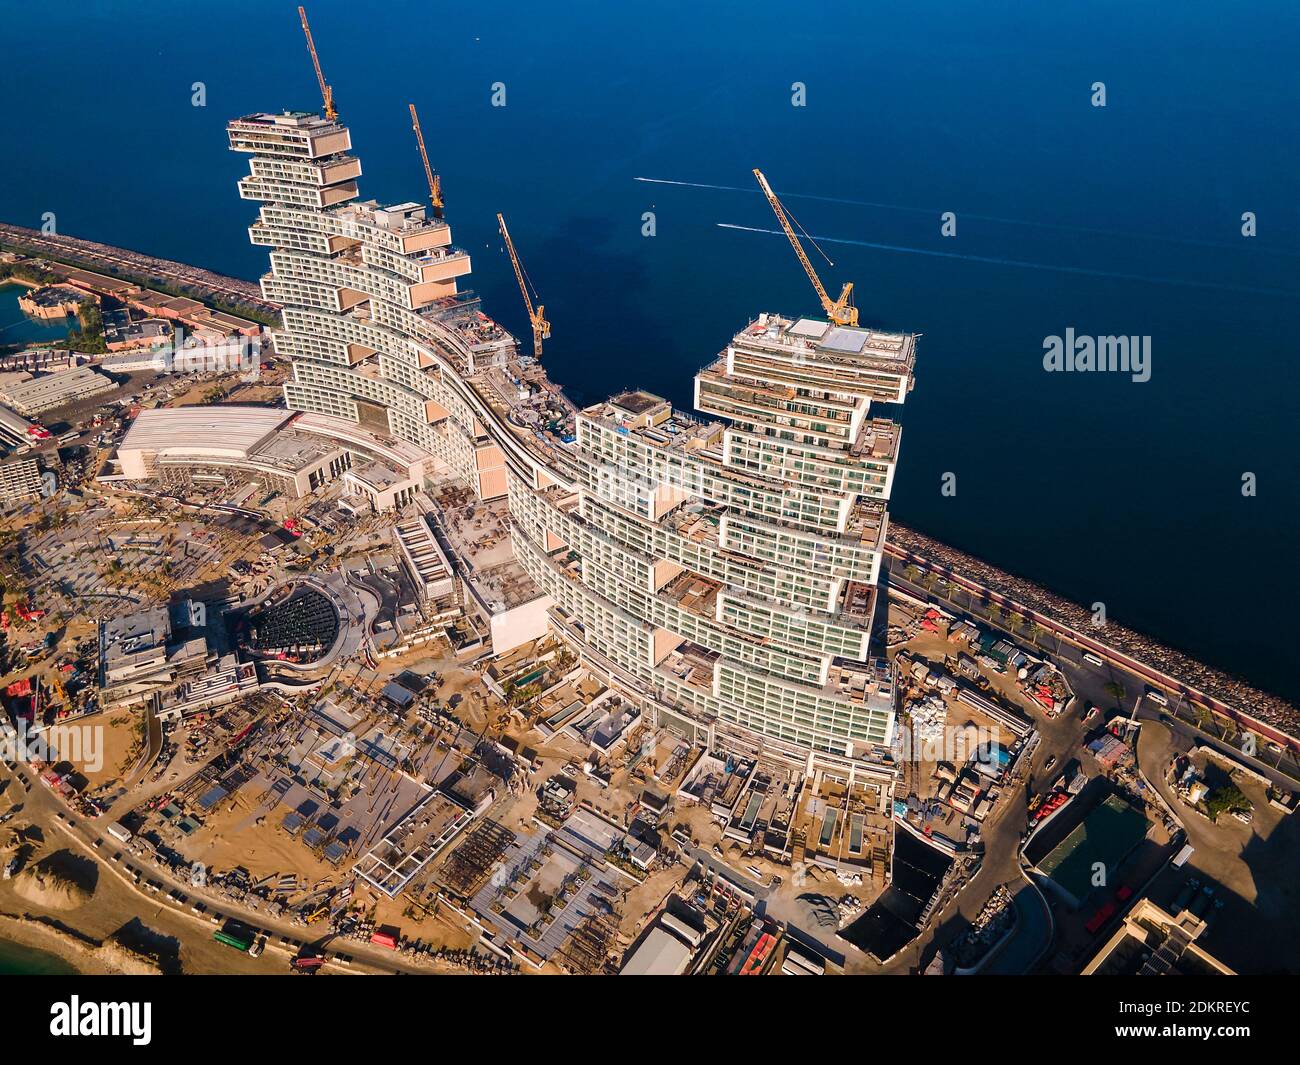 Dubai, United Arab Emirates - December 1, 2020: The Royal Atlantis Resort & Residences under construction on the Palm Jumeirah island in Dubai United Stock Photo